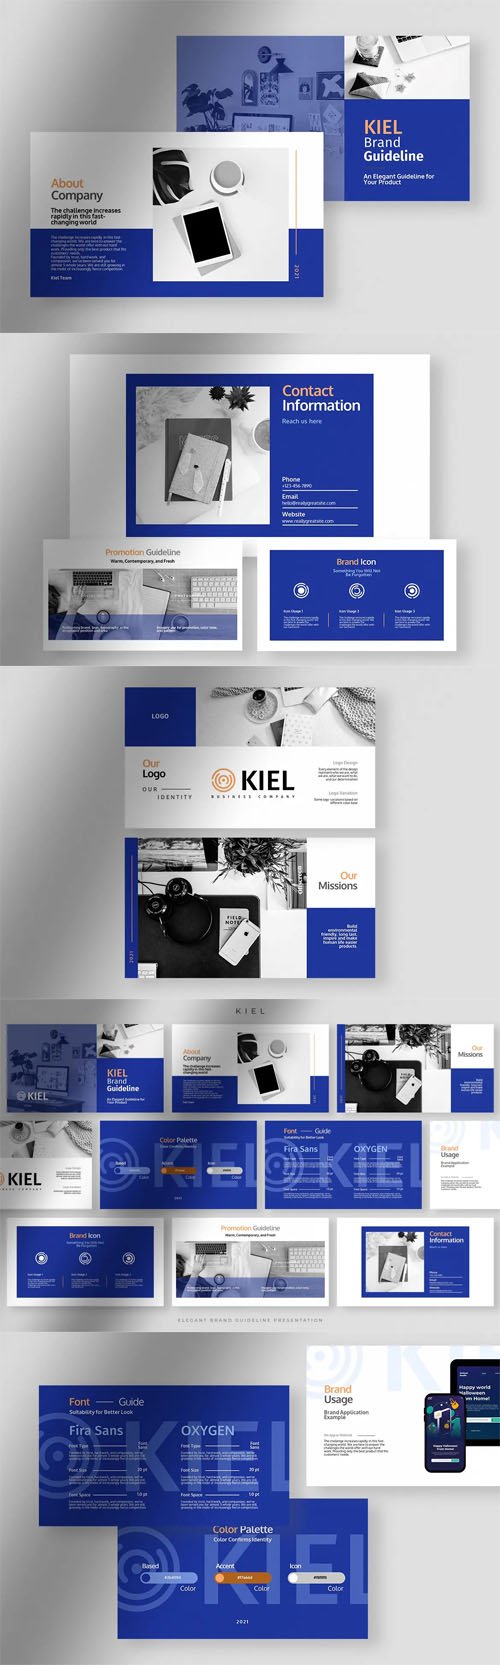 Kiel Brand Guideline Presentation Powerpoint Template